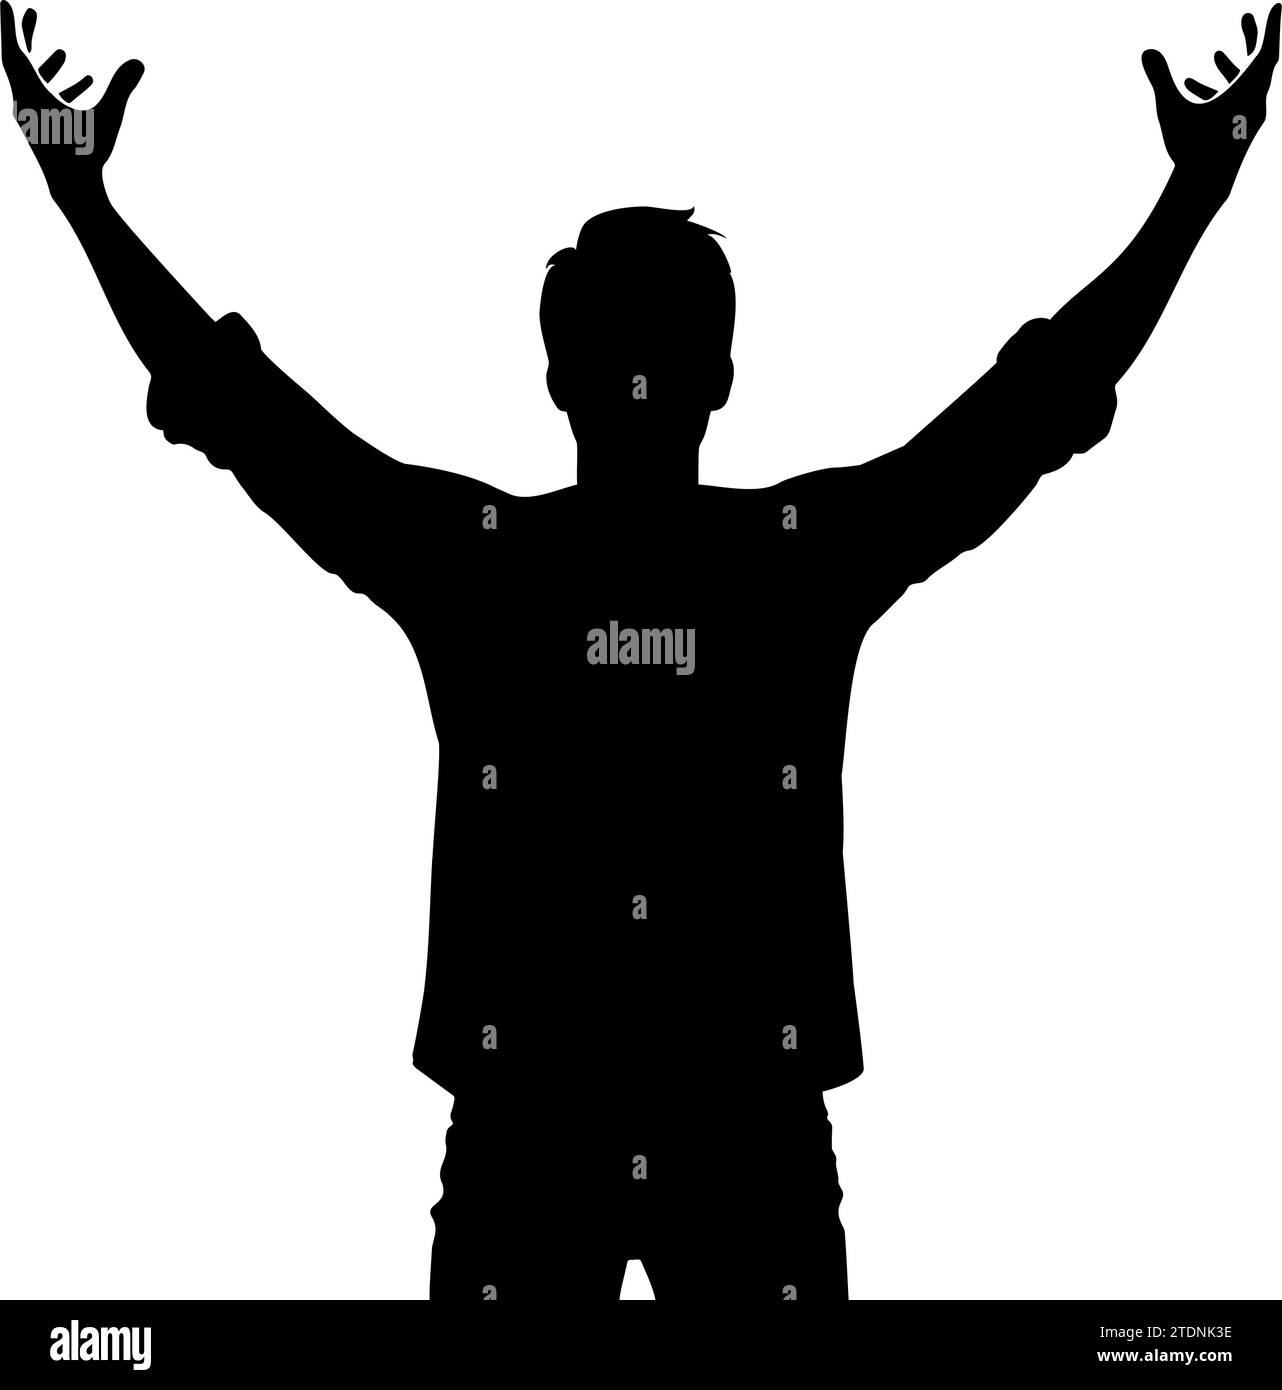 Silhouette of a man raising arms. vector illustration Stock Vector